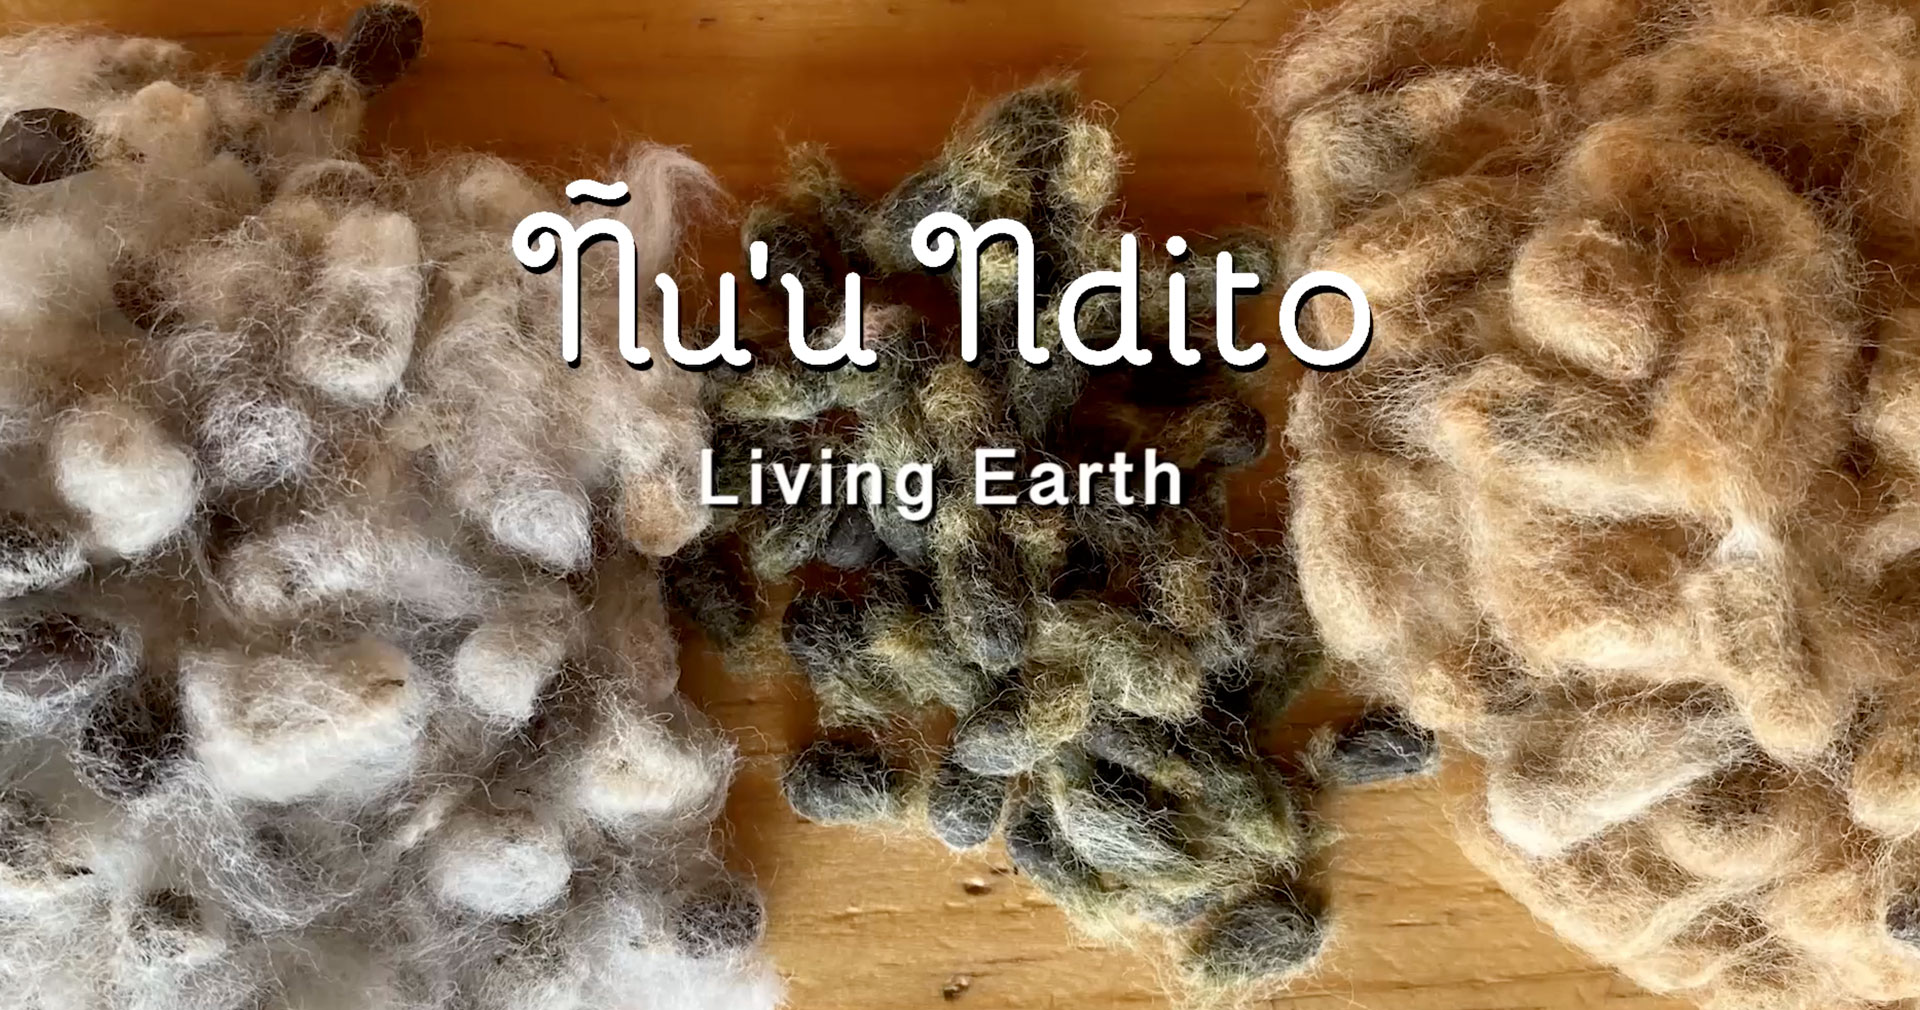 Ñu'u Ndito-Living Earth english